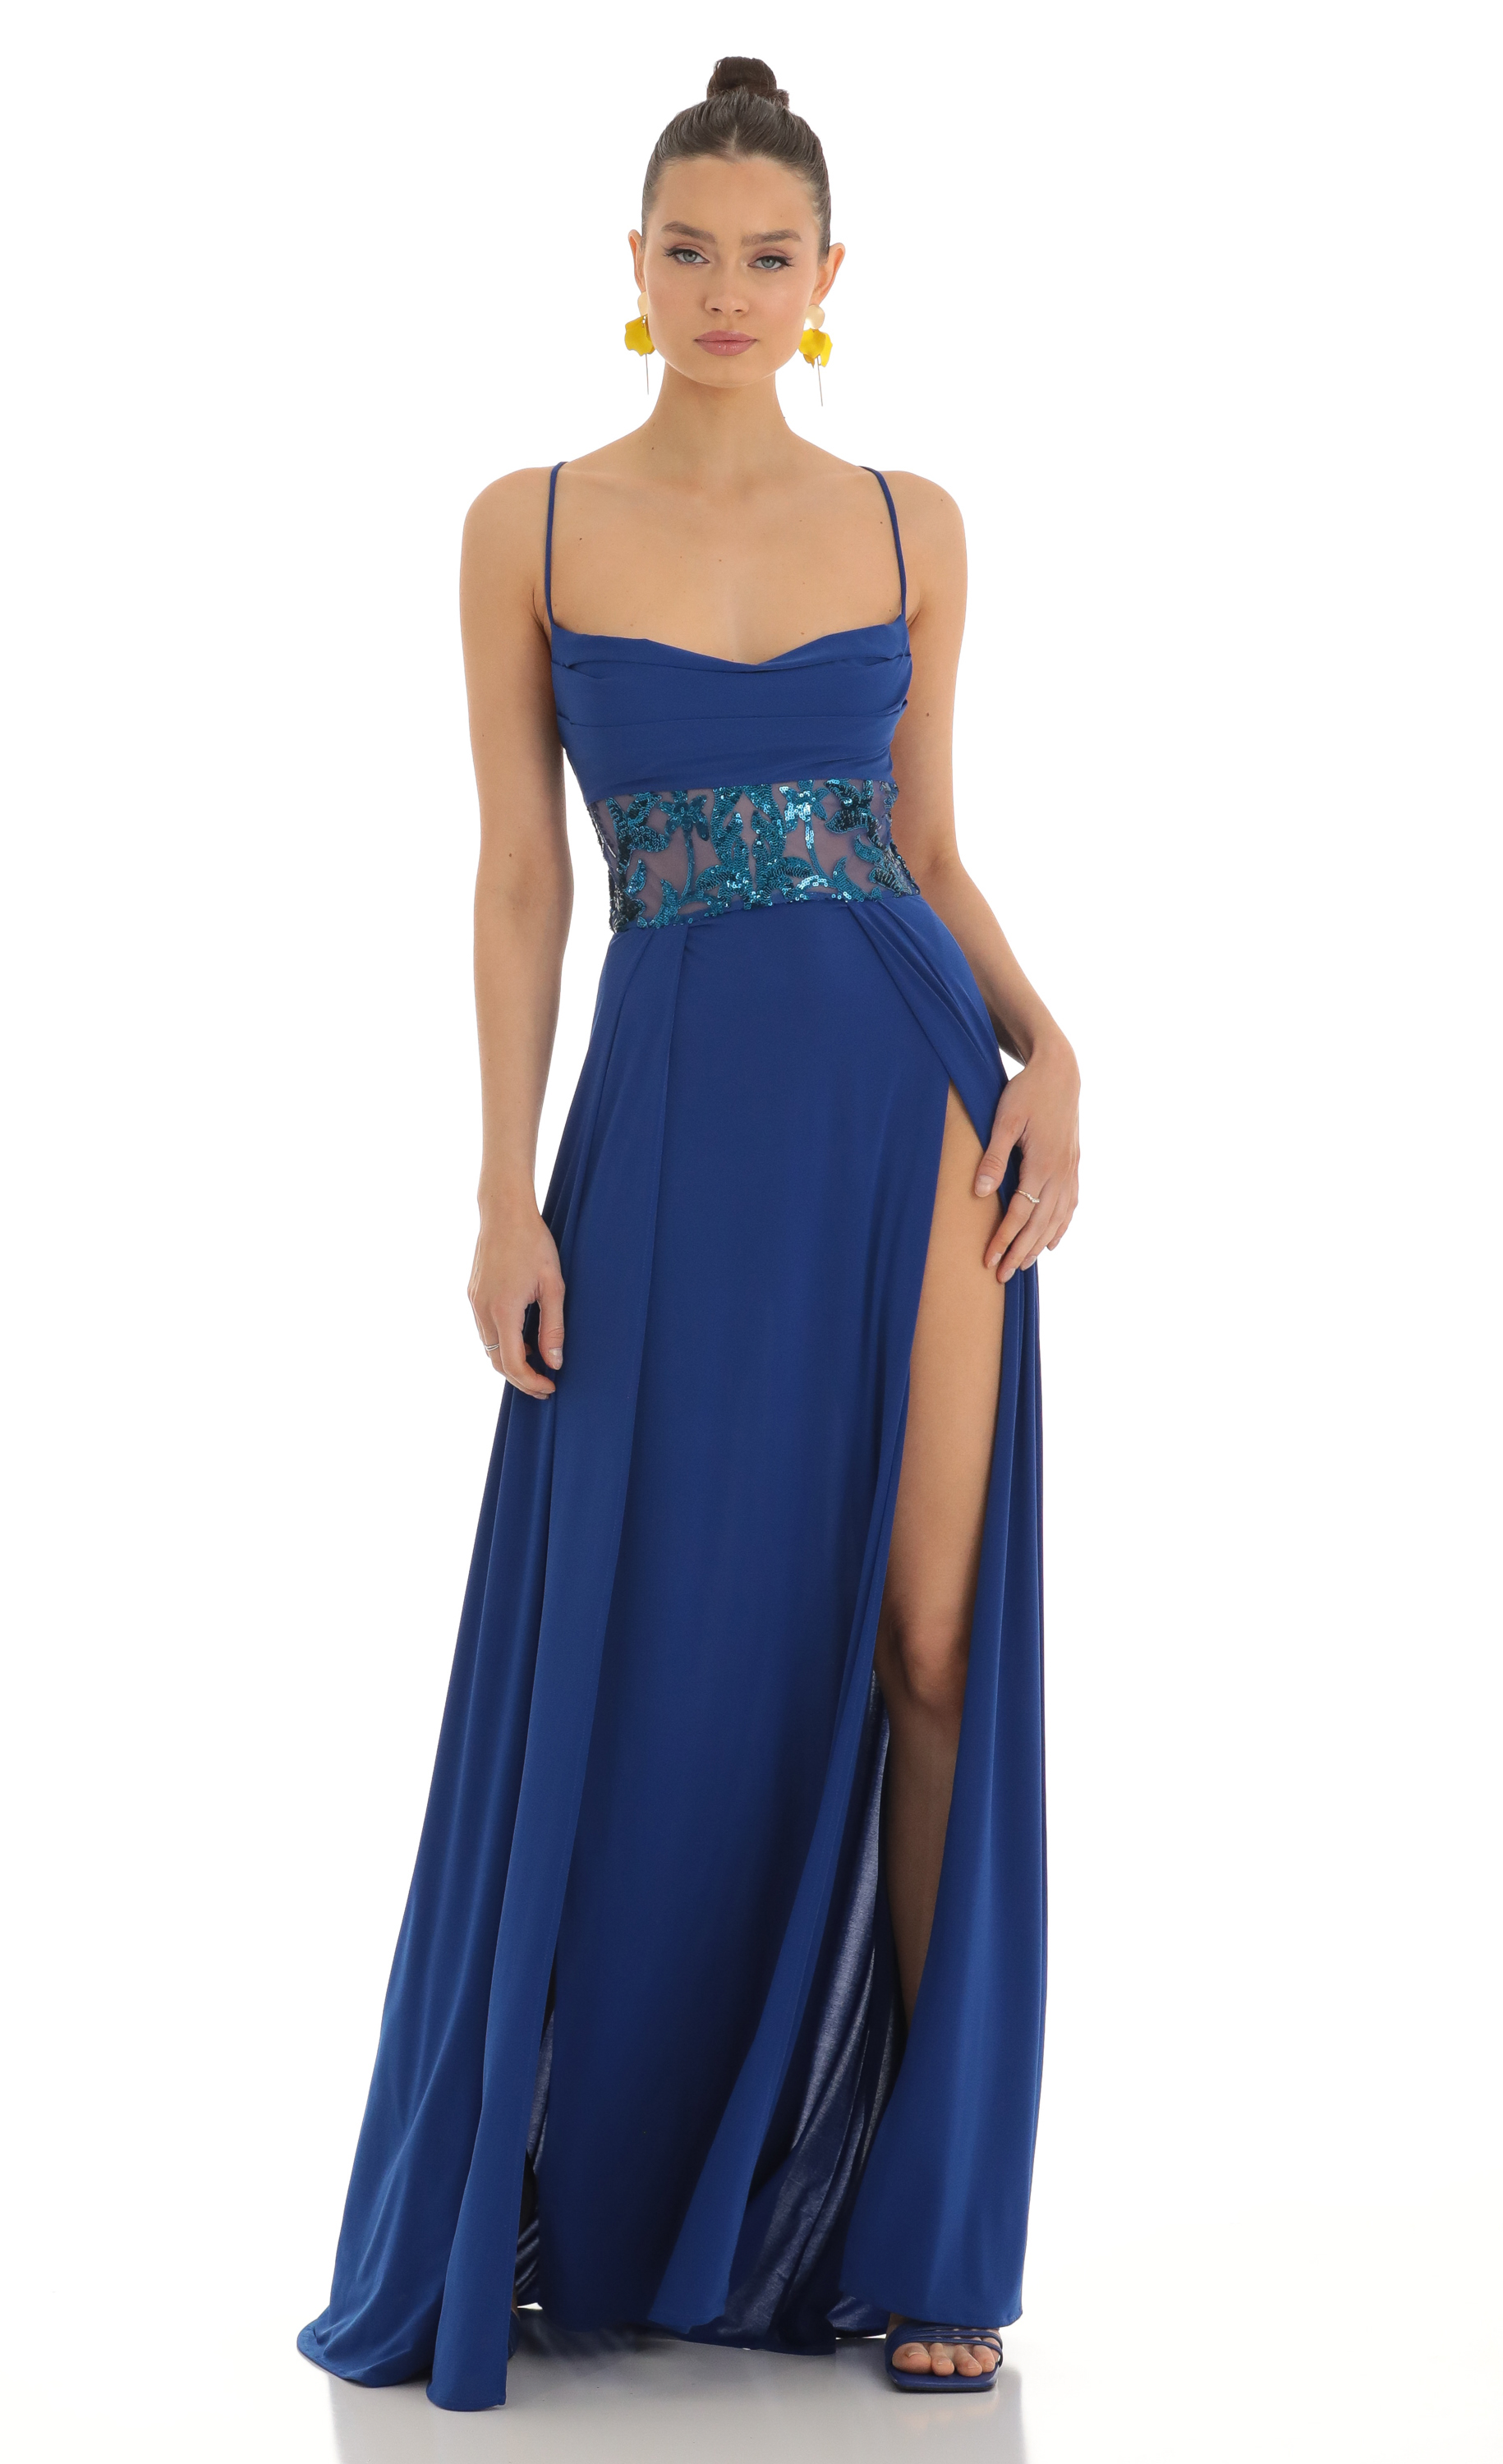 Silk dress | Stunning prom dresses, Prom dresses blue, Trendy prom dresses